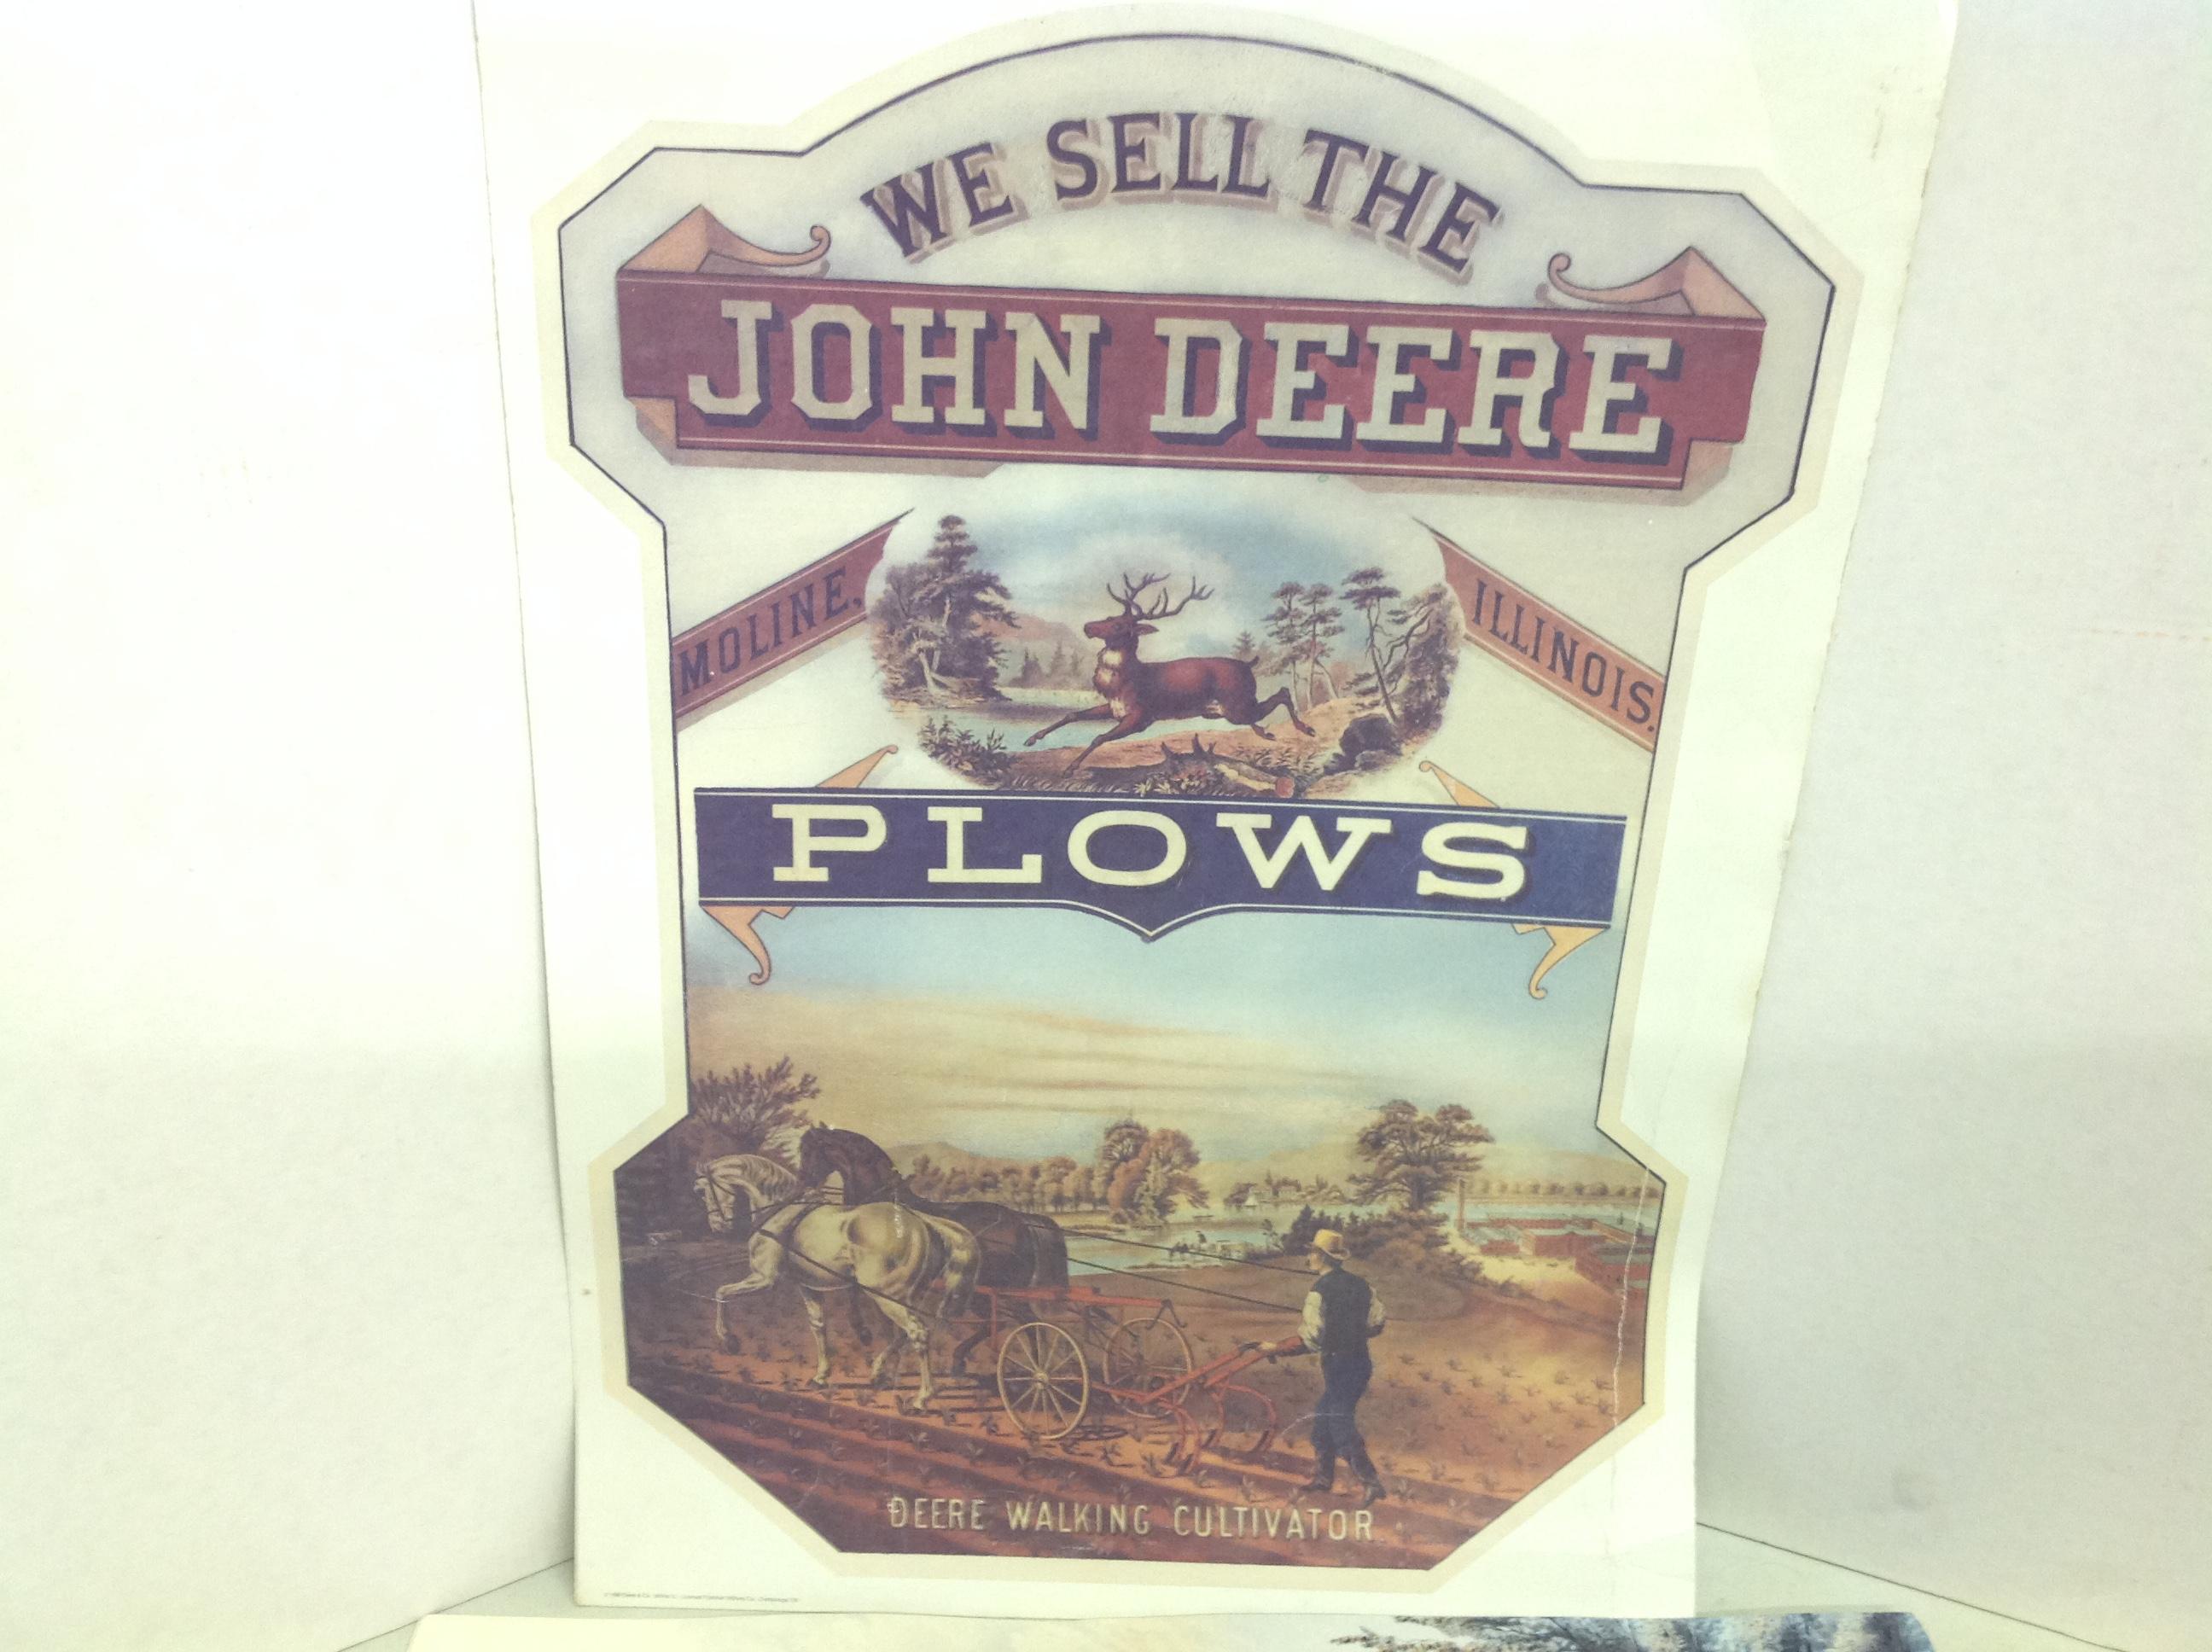 We Sell The John Deere Plow Litho, JD & Co. II Poster Print Williams Co. Gi